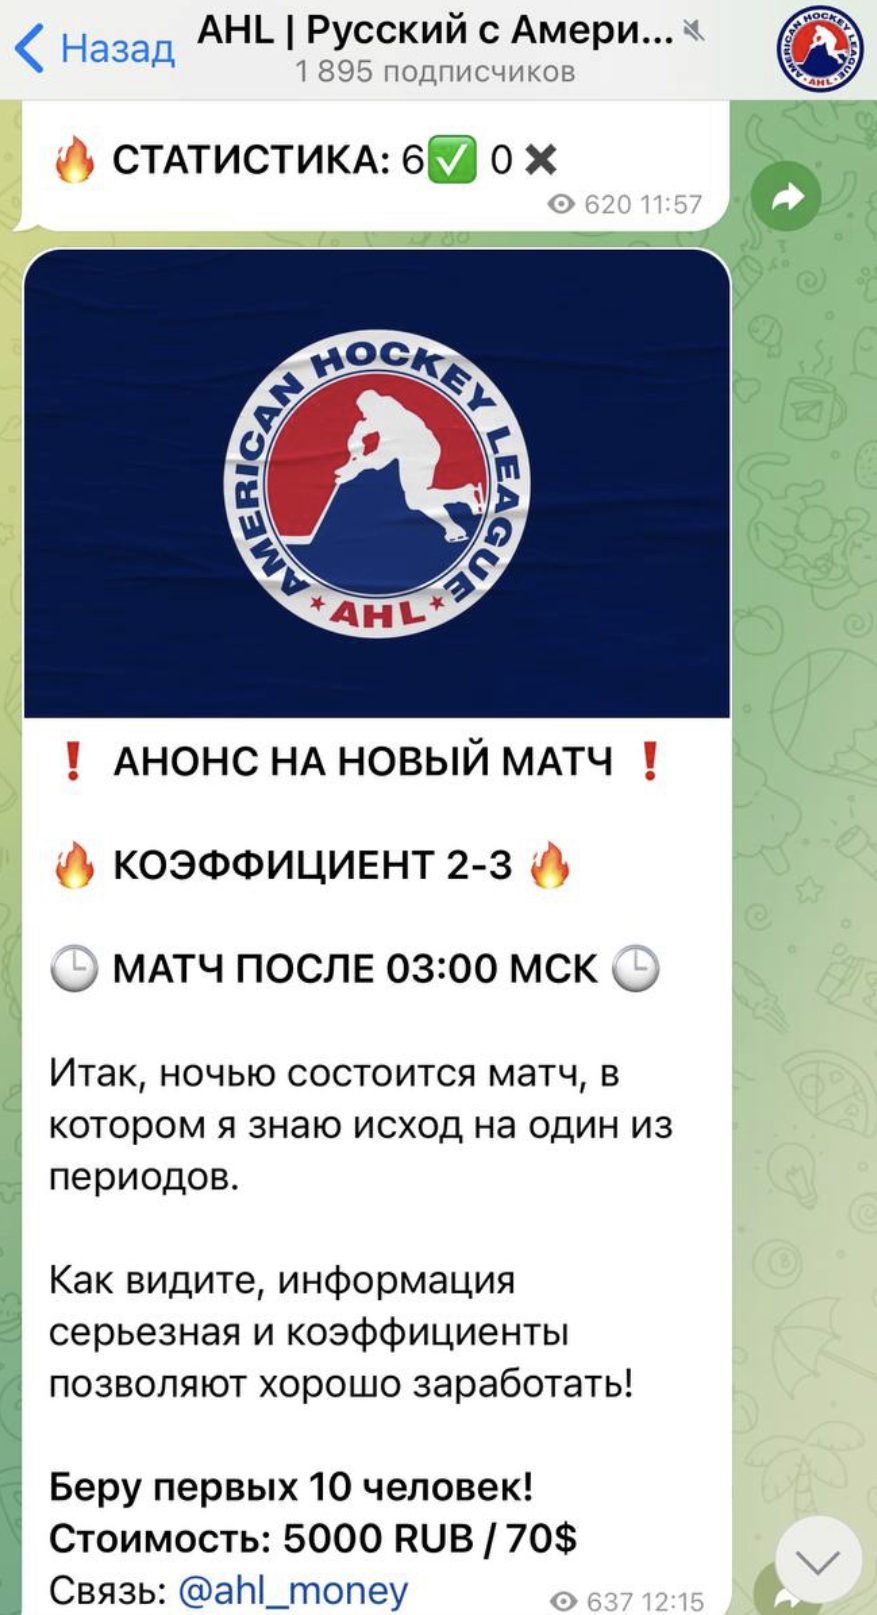 AHL Русский с Америки телеграмм